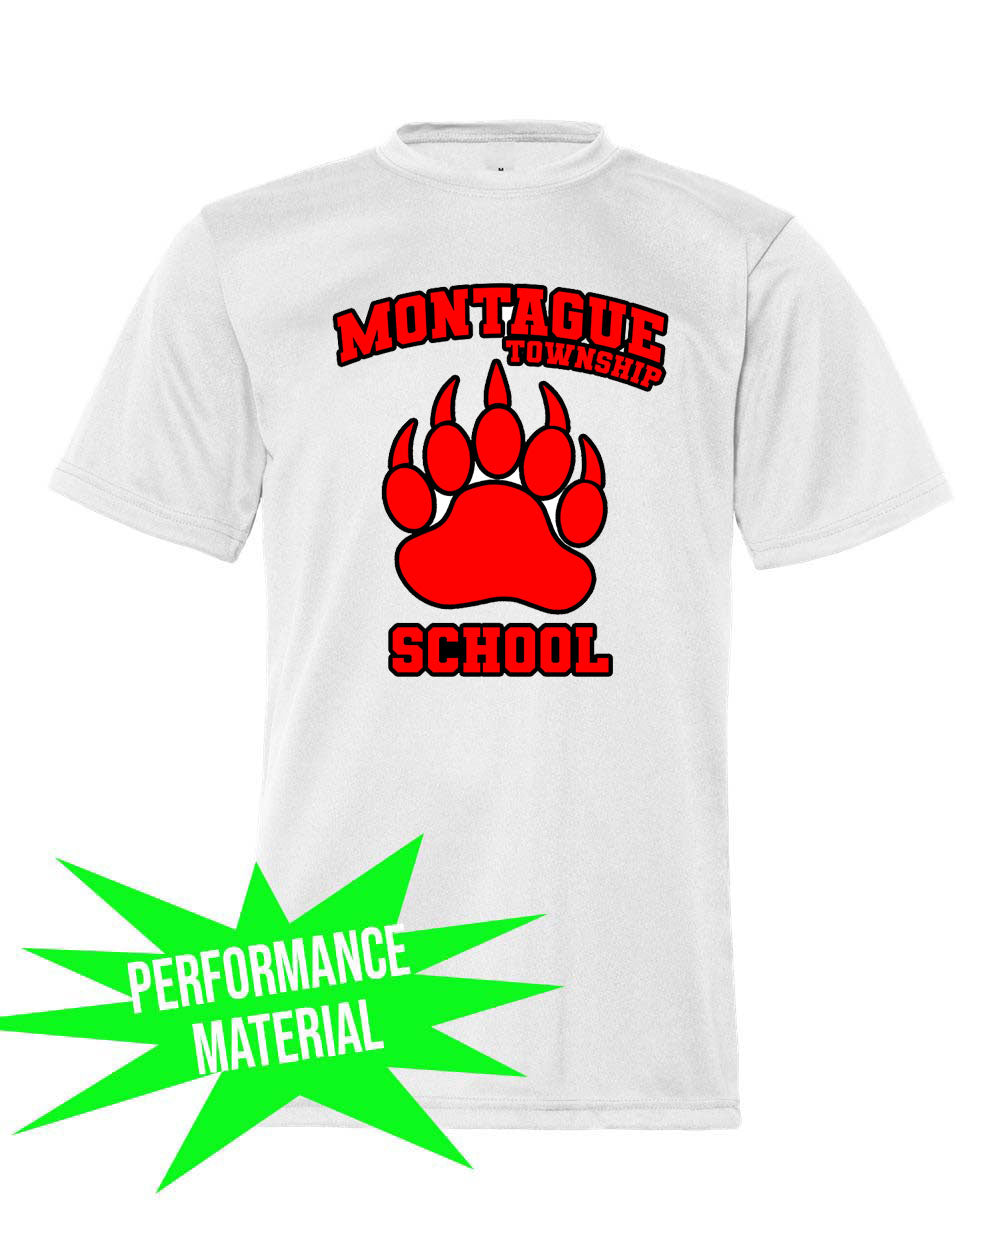 Montague Performance Material Design 2 T-Shirt